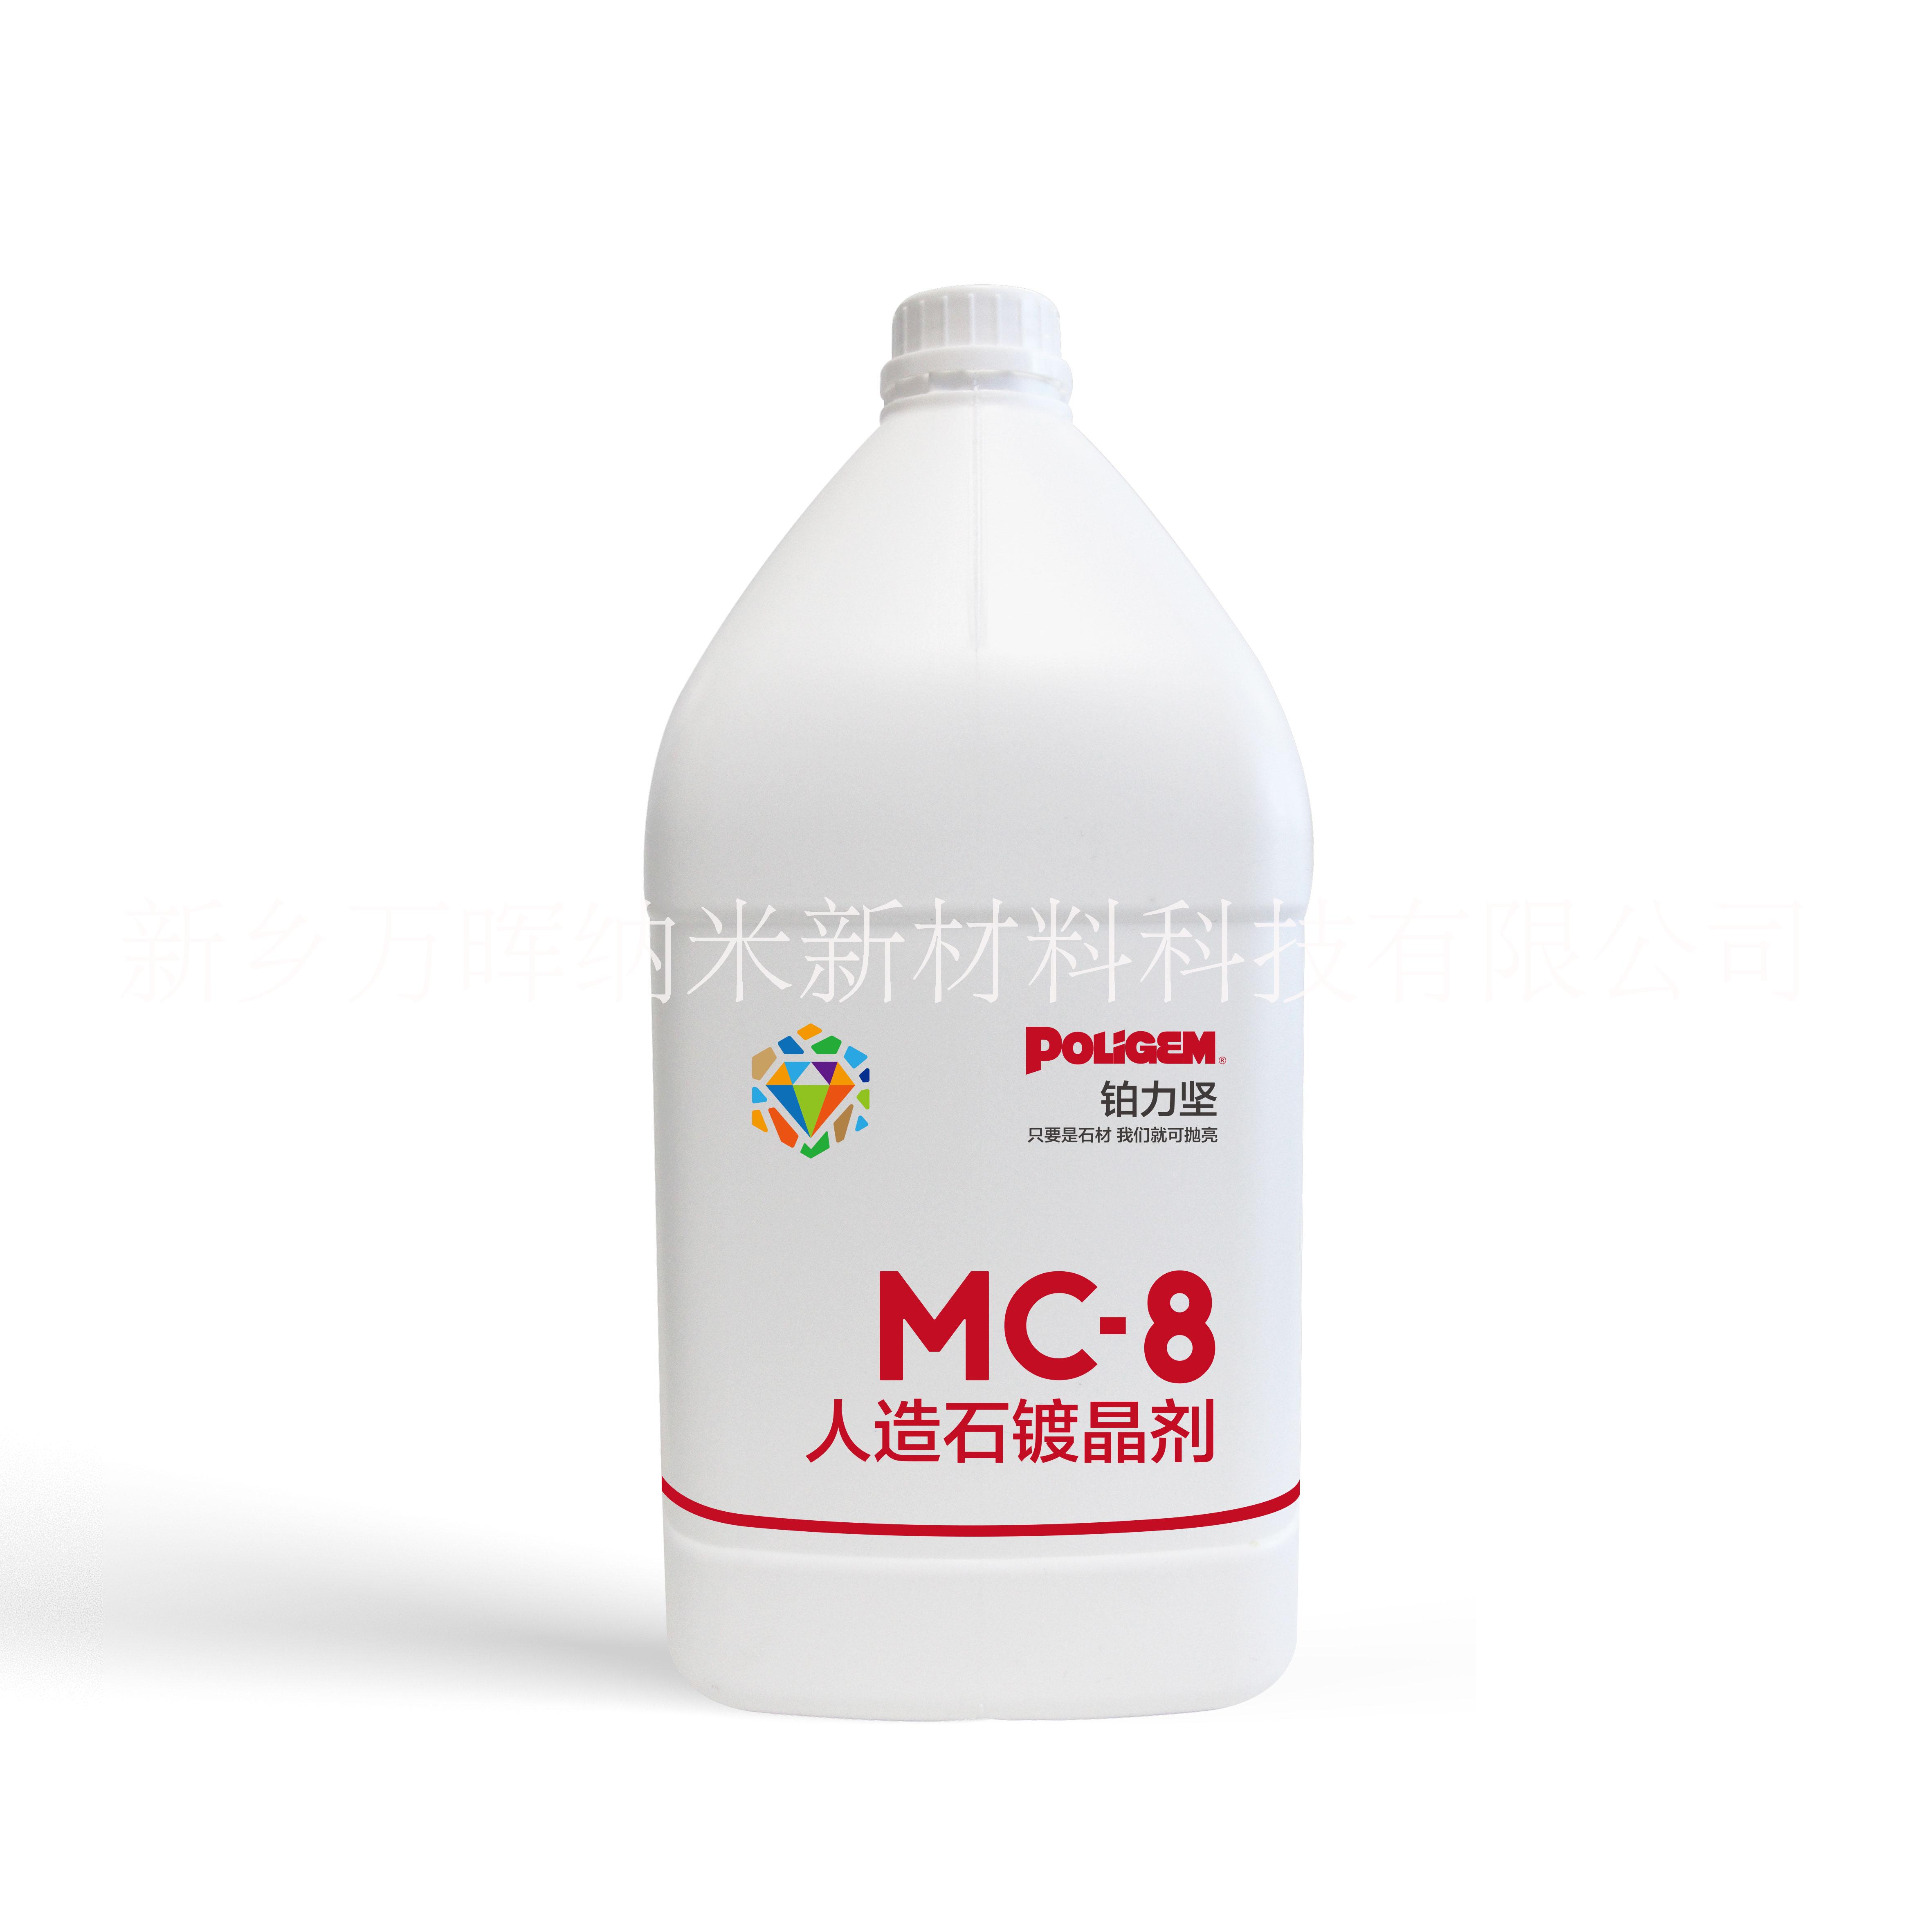 MC-8人造石镀晶剂